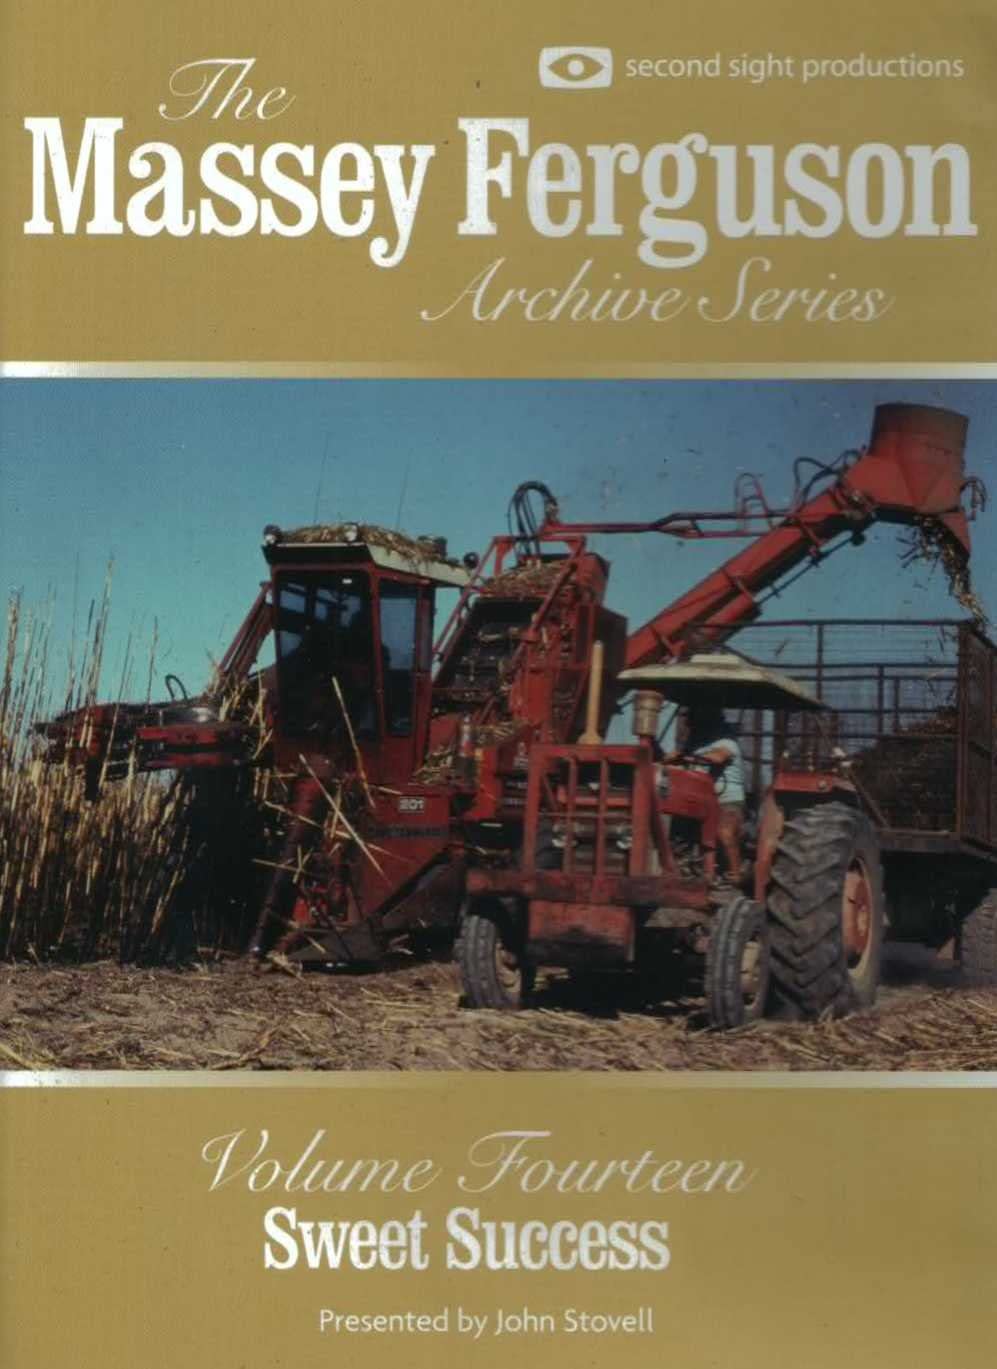 THE MASSEY FERGUSON ARCHIVE SERIES Volume 14 Sweet Success